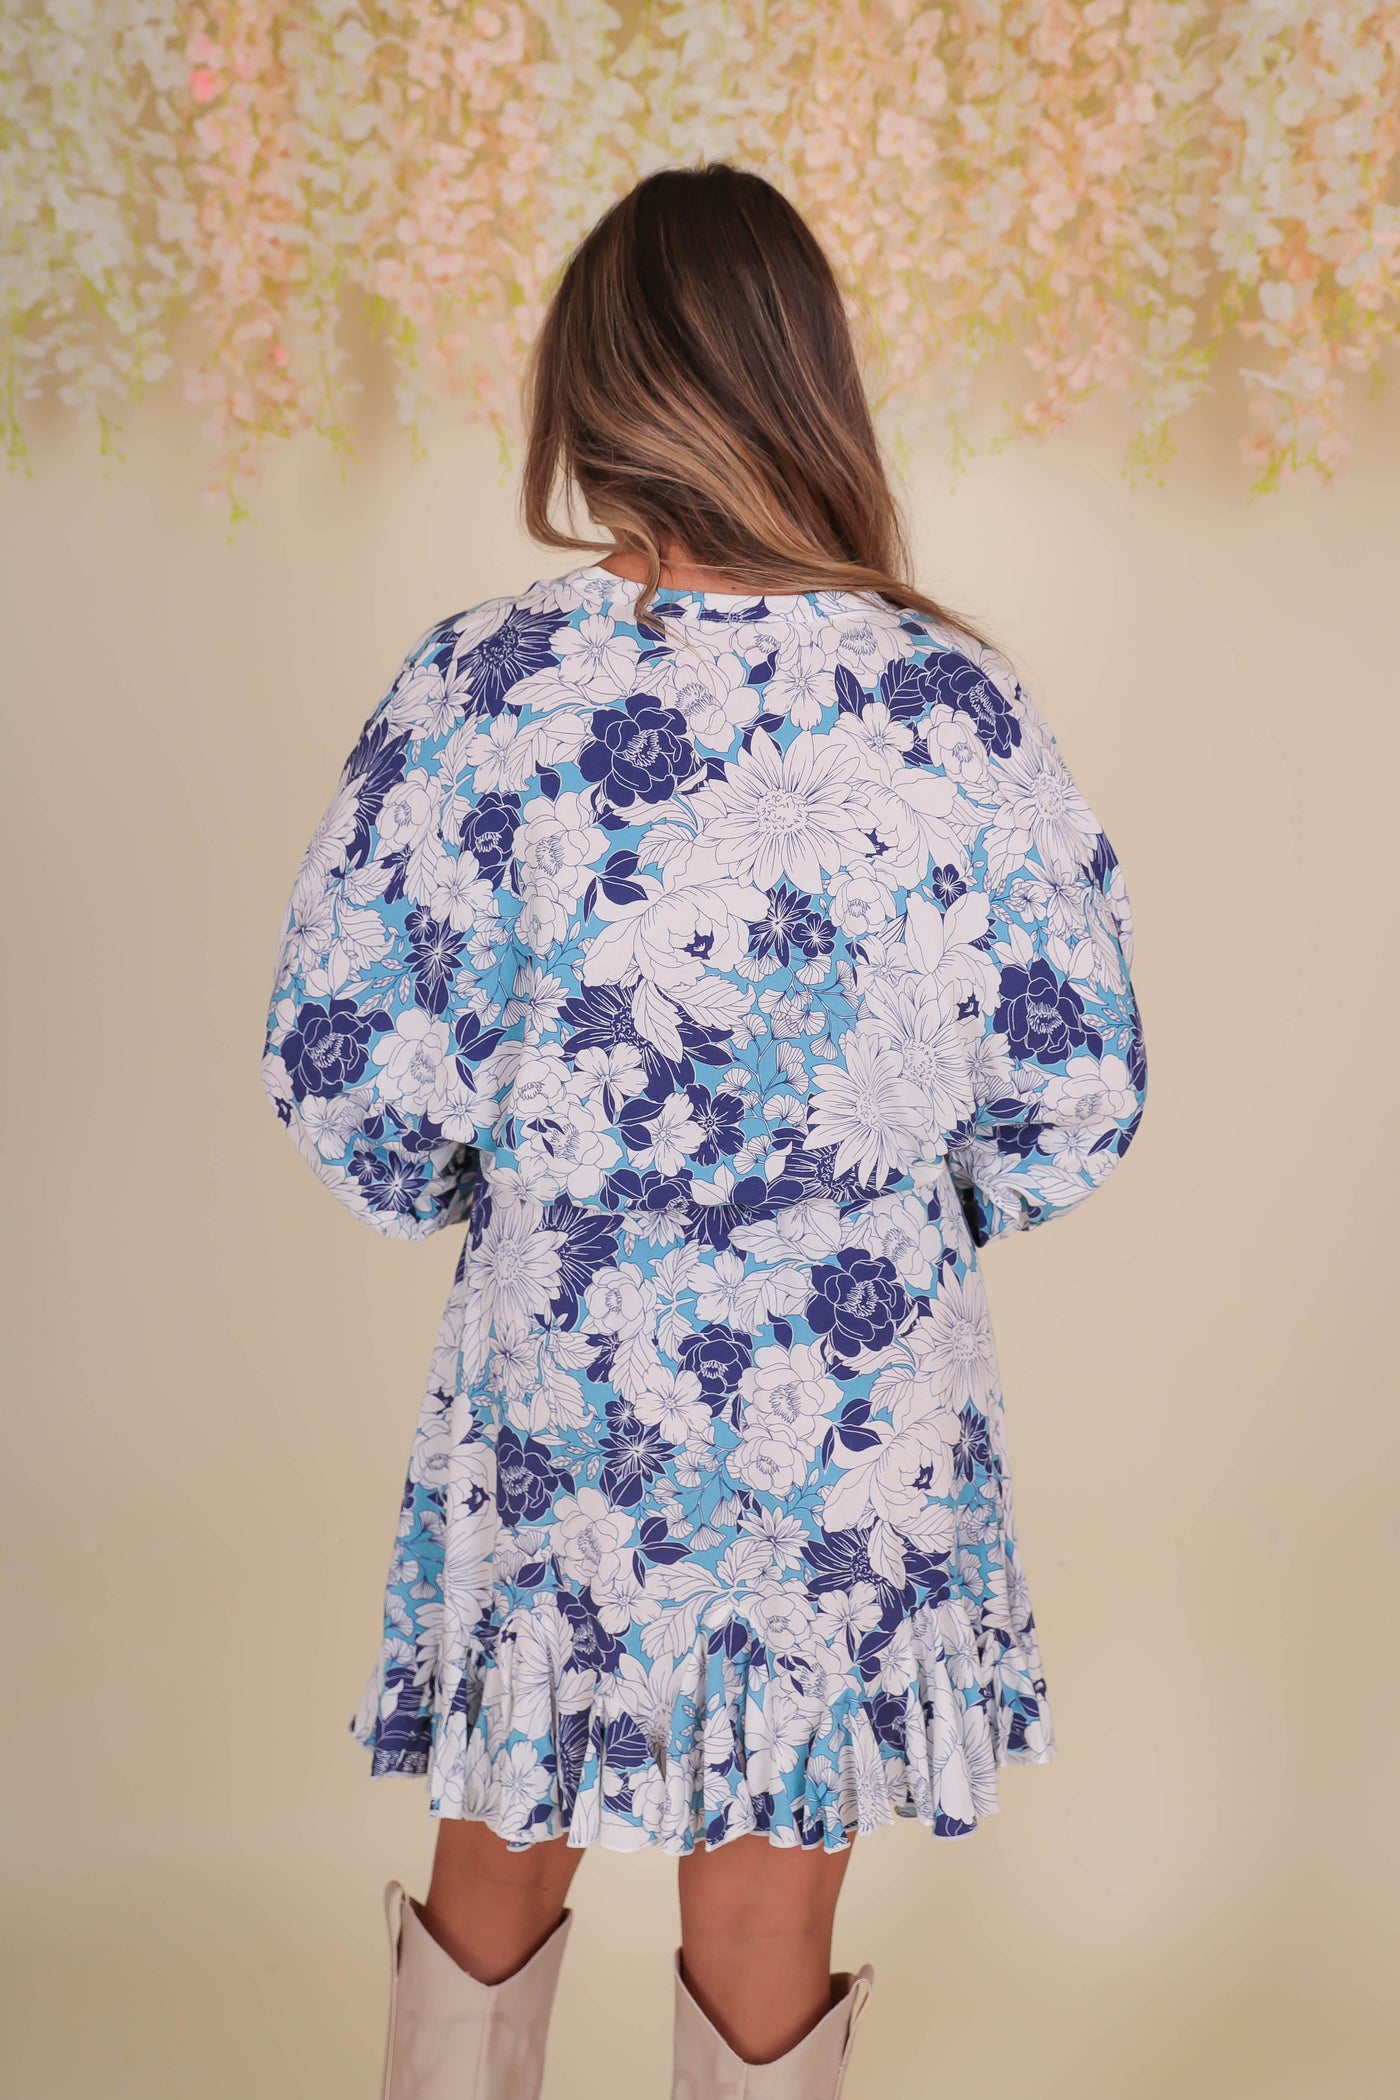 Blue Floral Print Dress- Retro Style Dress- Women's Blue Dress